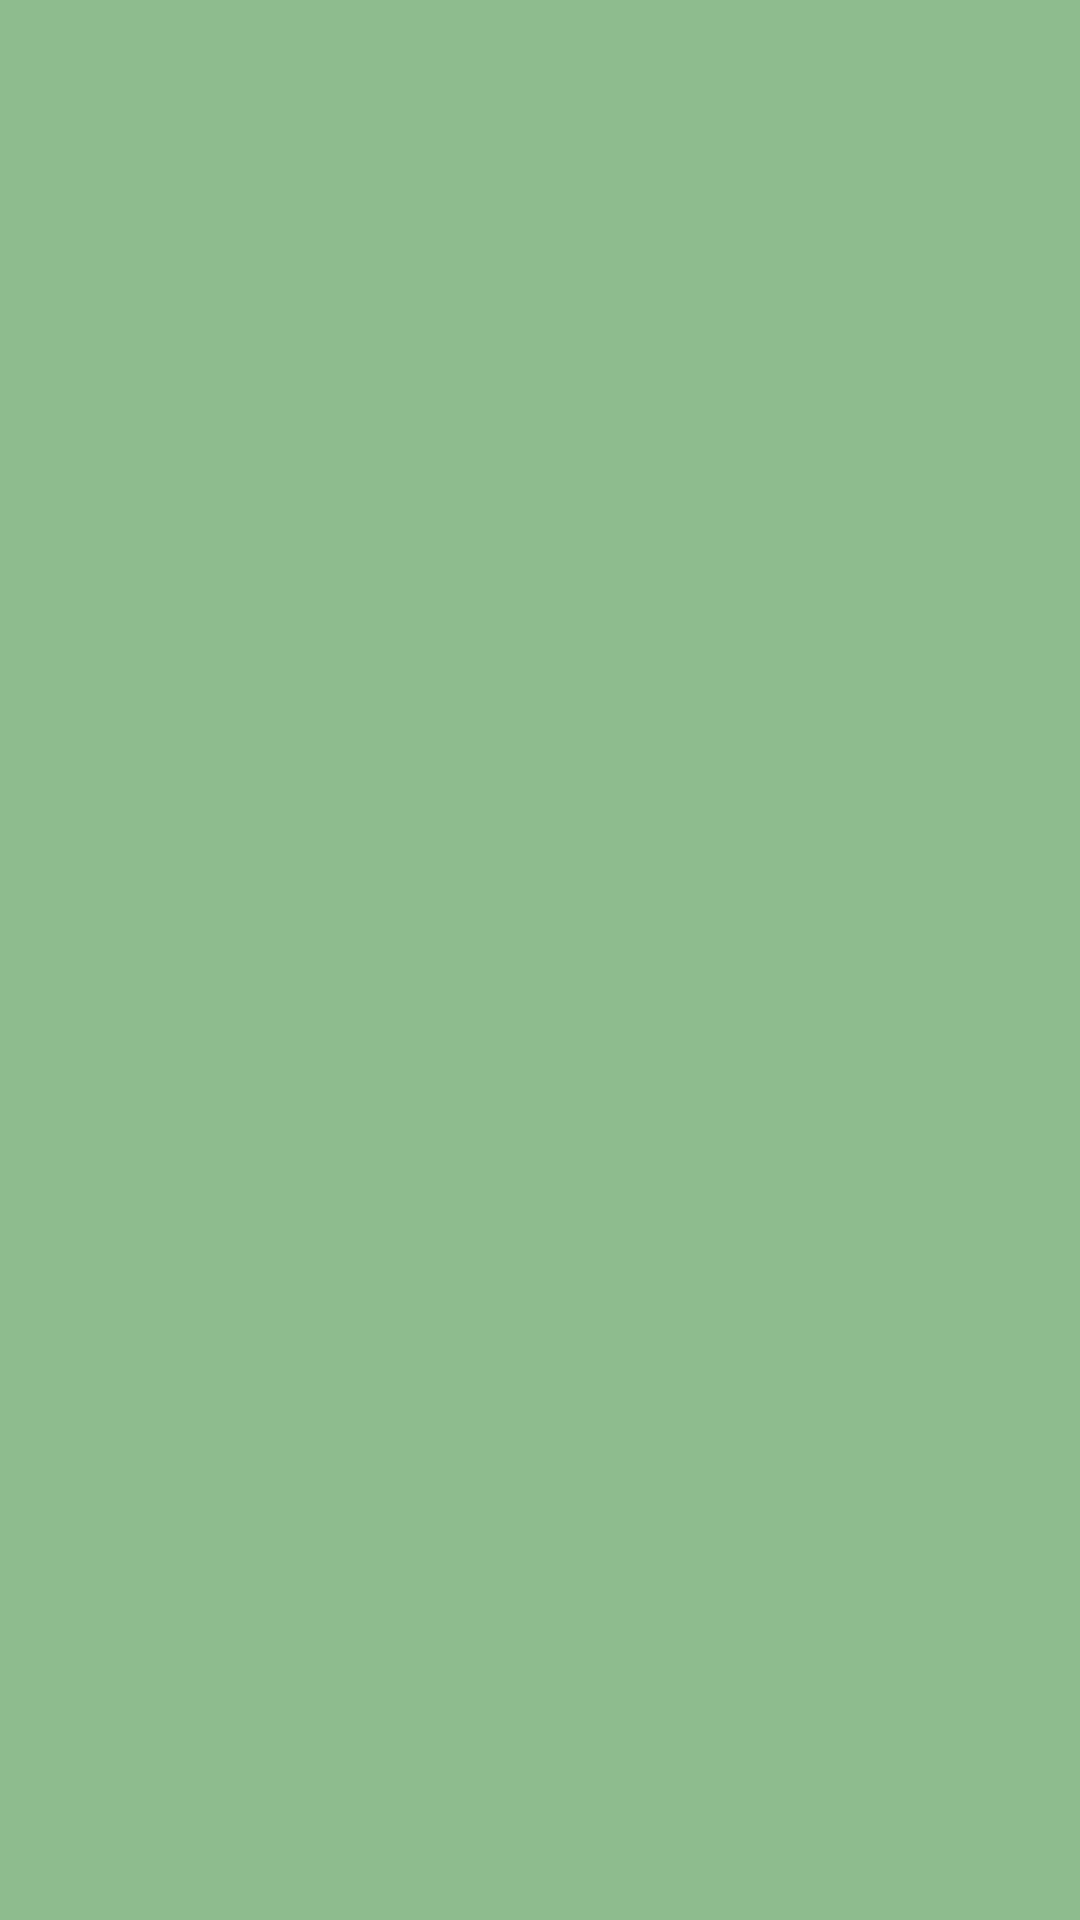 1080x1920 Dark Sea Green Solid Color Background